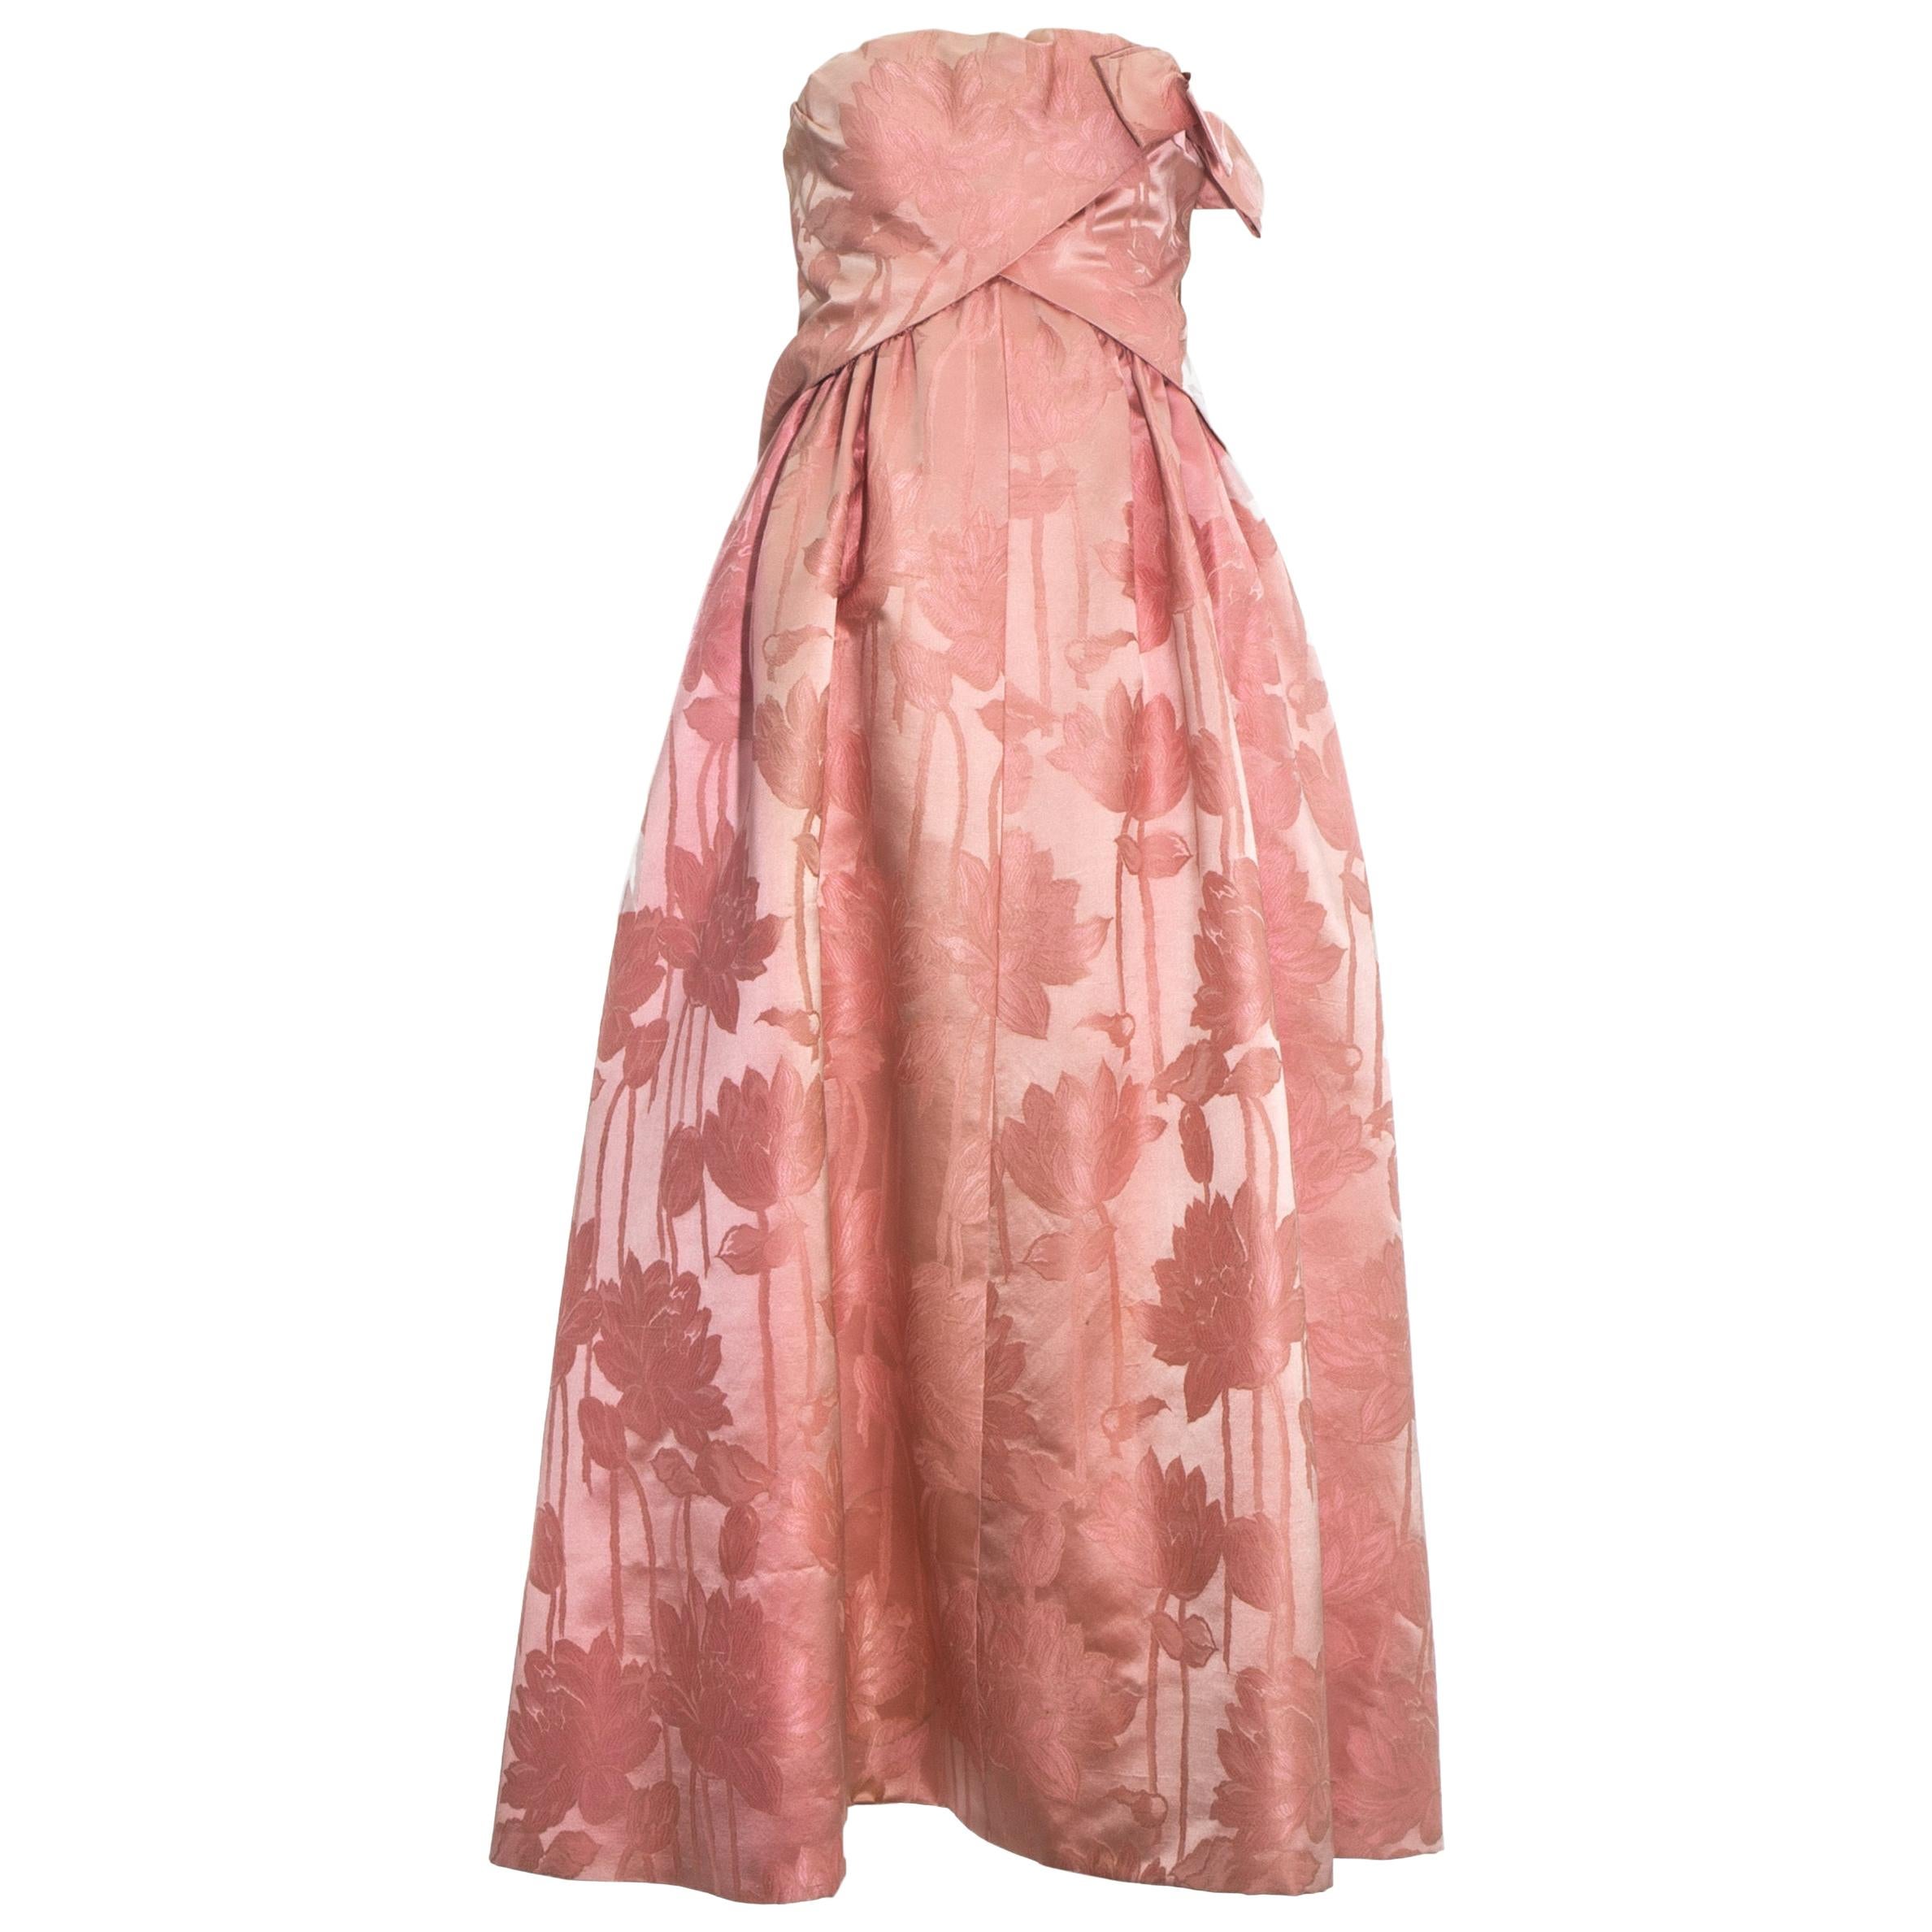 Paul Daunay couture pink silk brocade evening gown, c. 1960